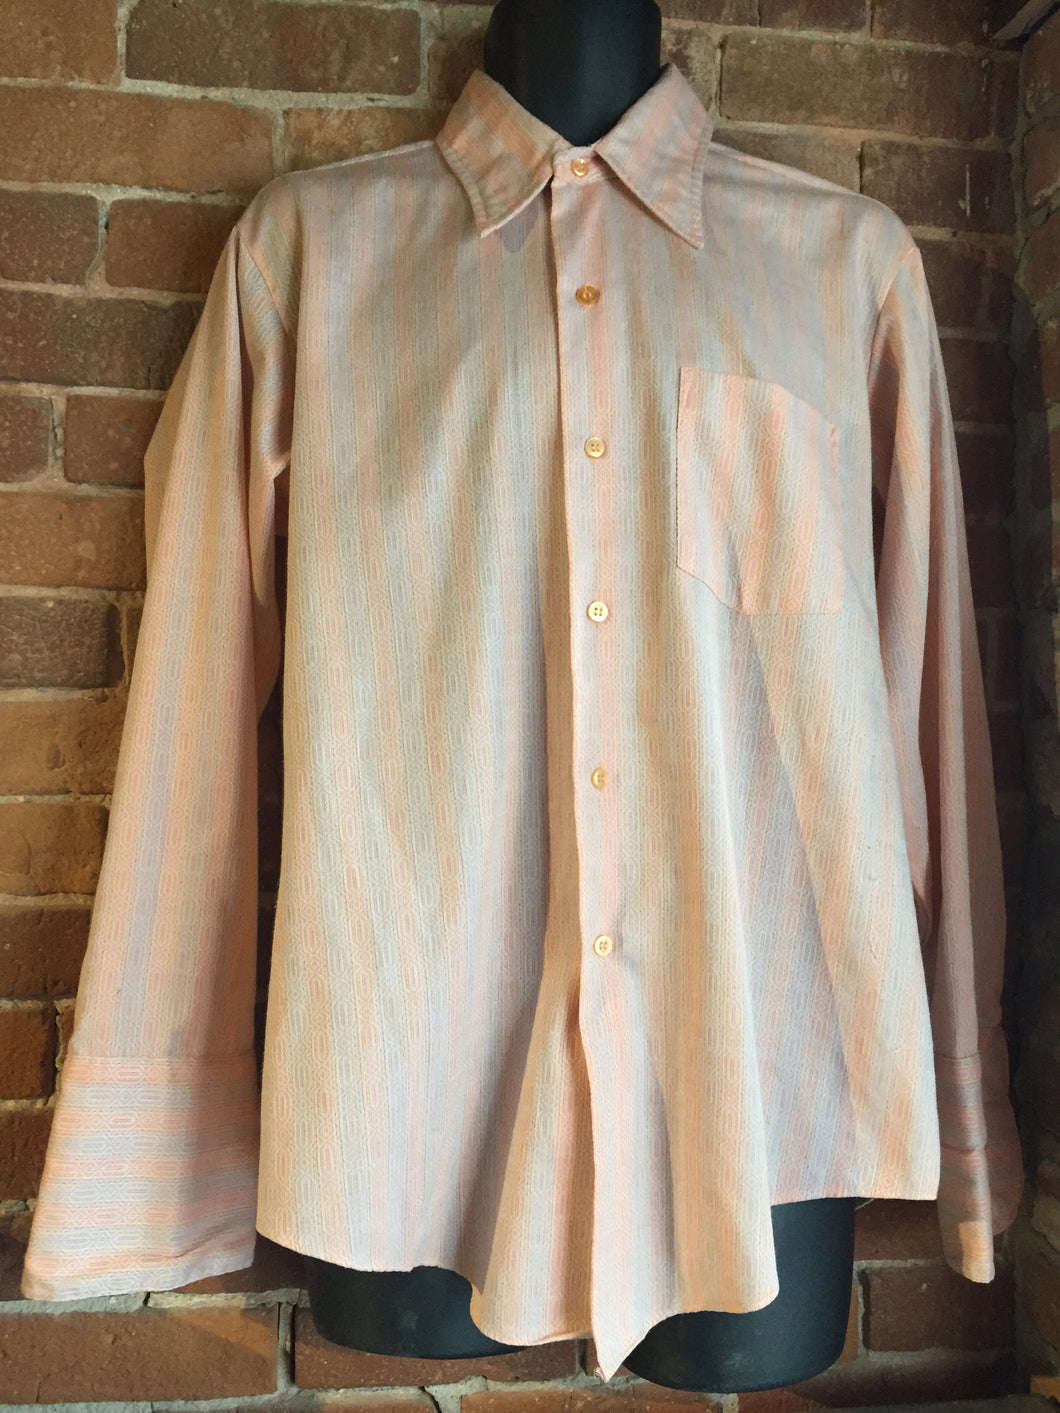 Kingspier Vintage - Pariani pink, orange, grey diamond and stripe pattern button up Tuxedo shirt. Mens size large.
